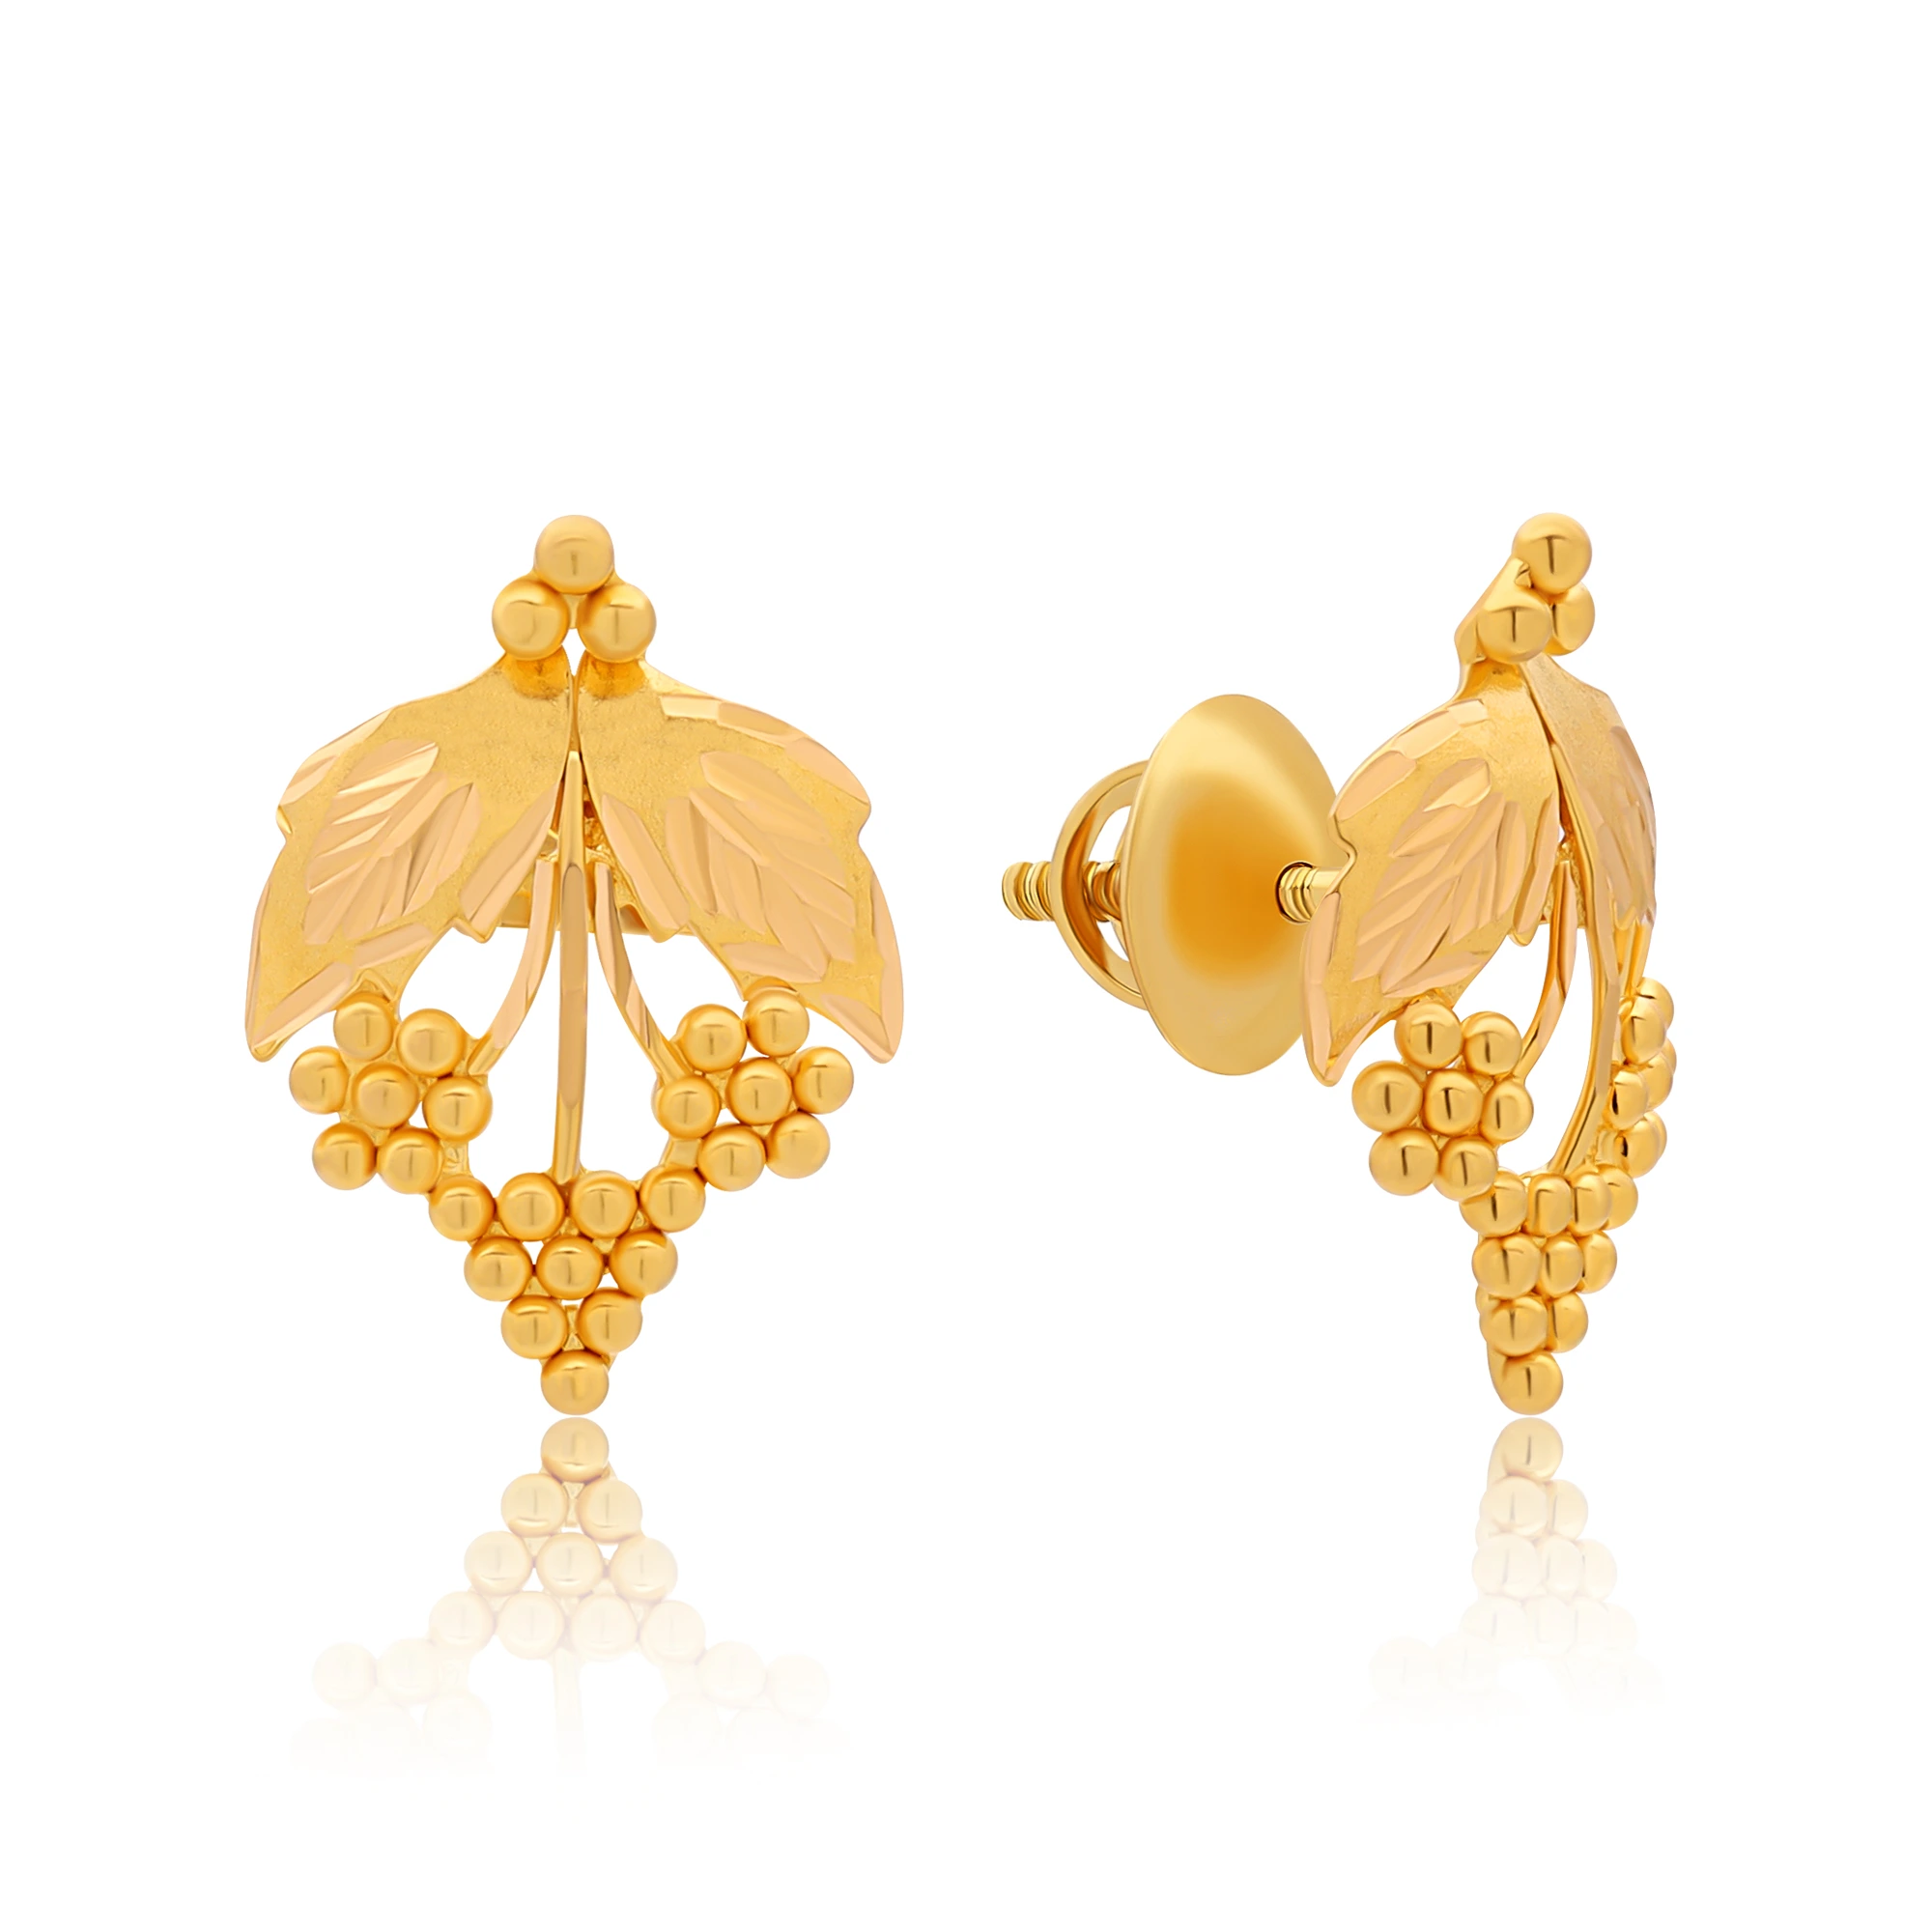 Share 169+ 22 carat gold earrings design best